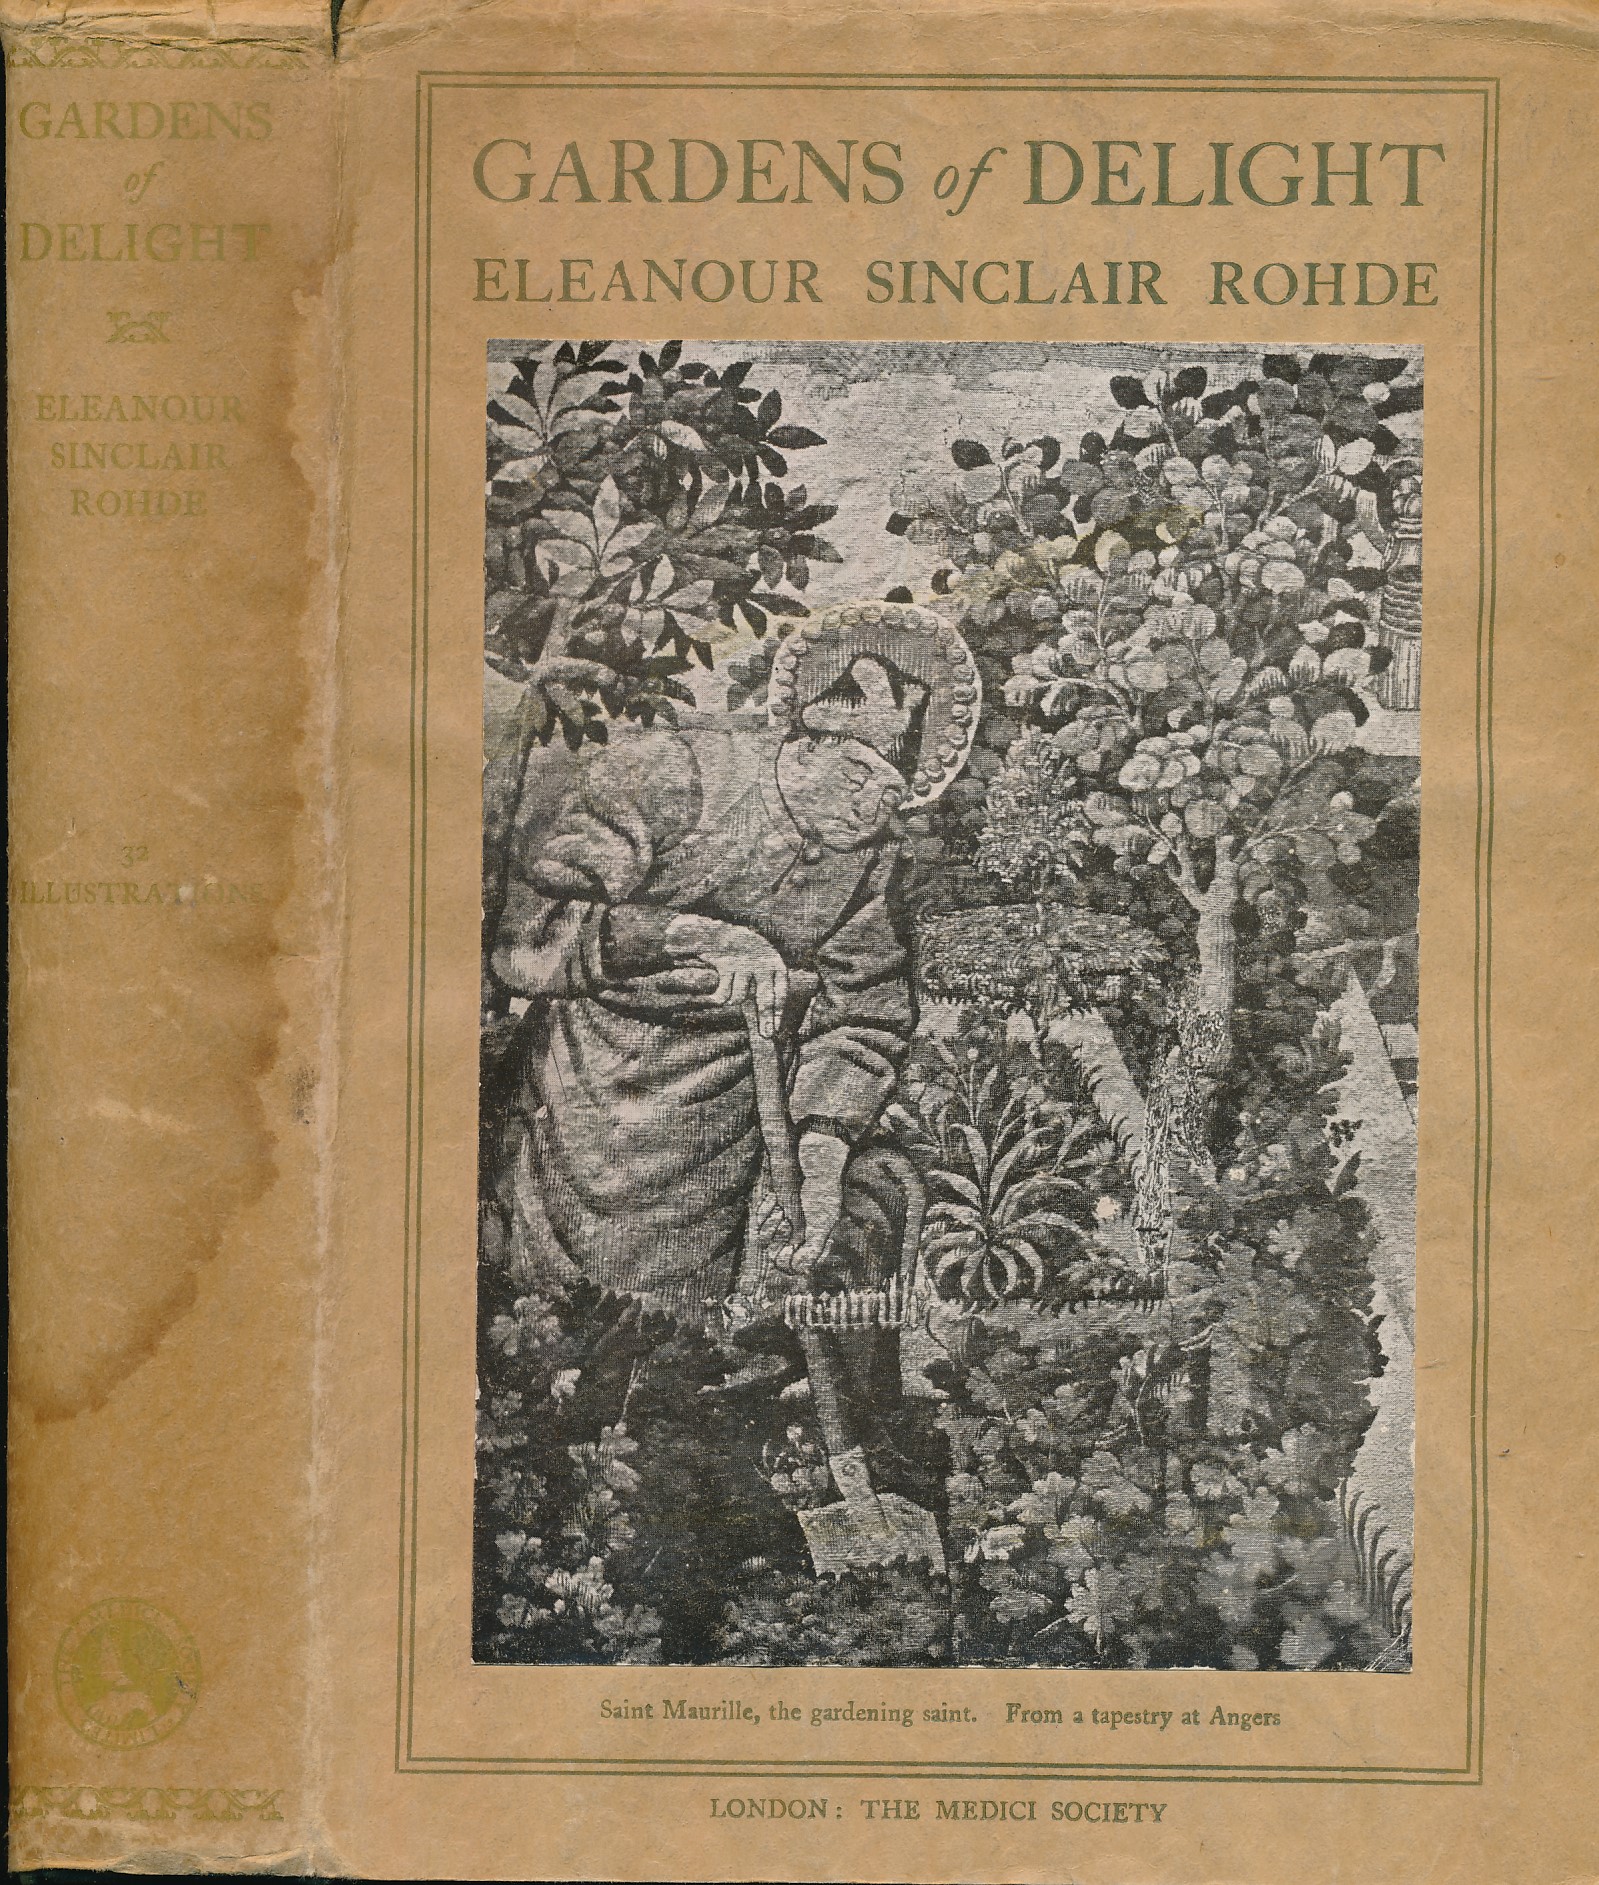 Gardens of Delight